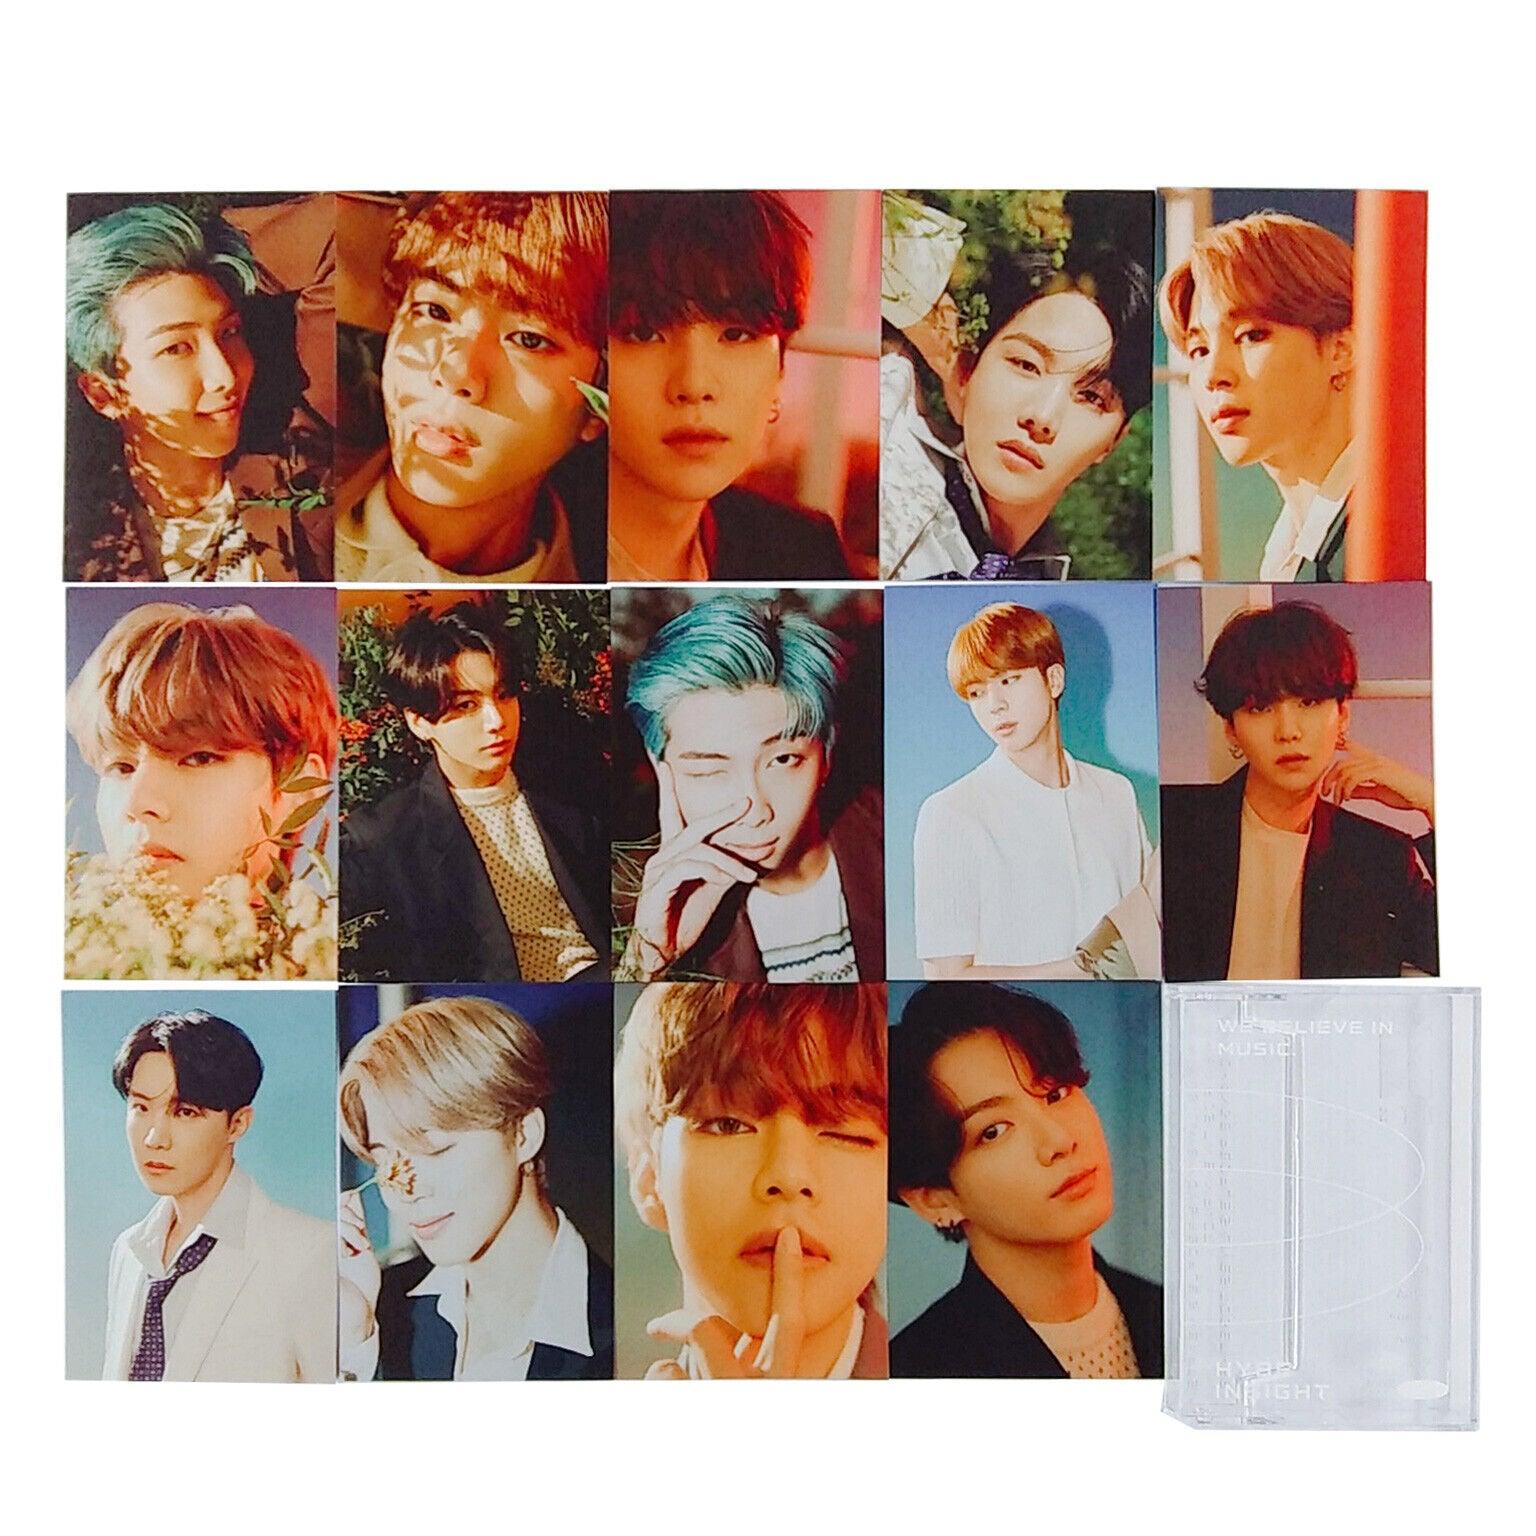 BTS- HYBE INSIGHT Goods -Photocard Set (Limited Edition.) - KAEPJJANG SHOP (캡짱 숍)